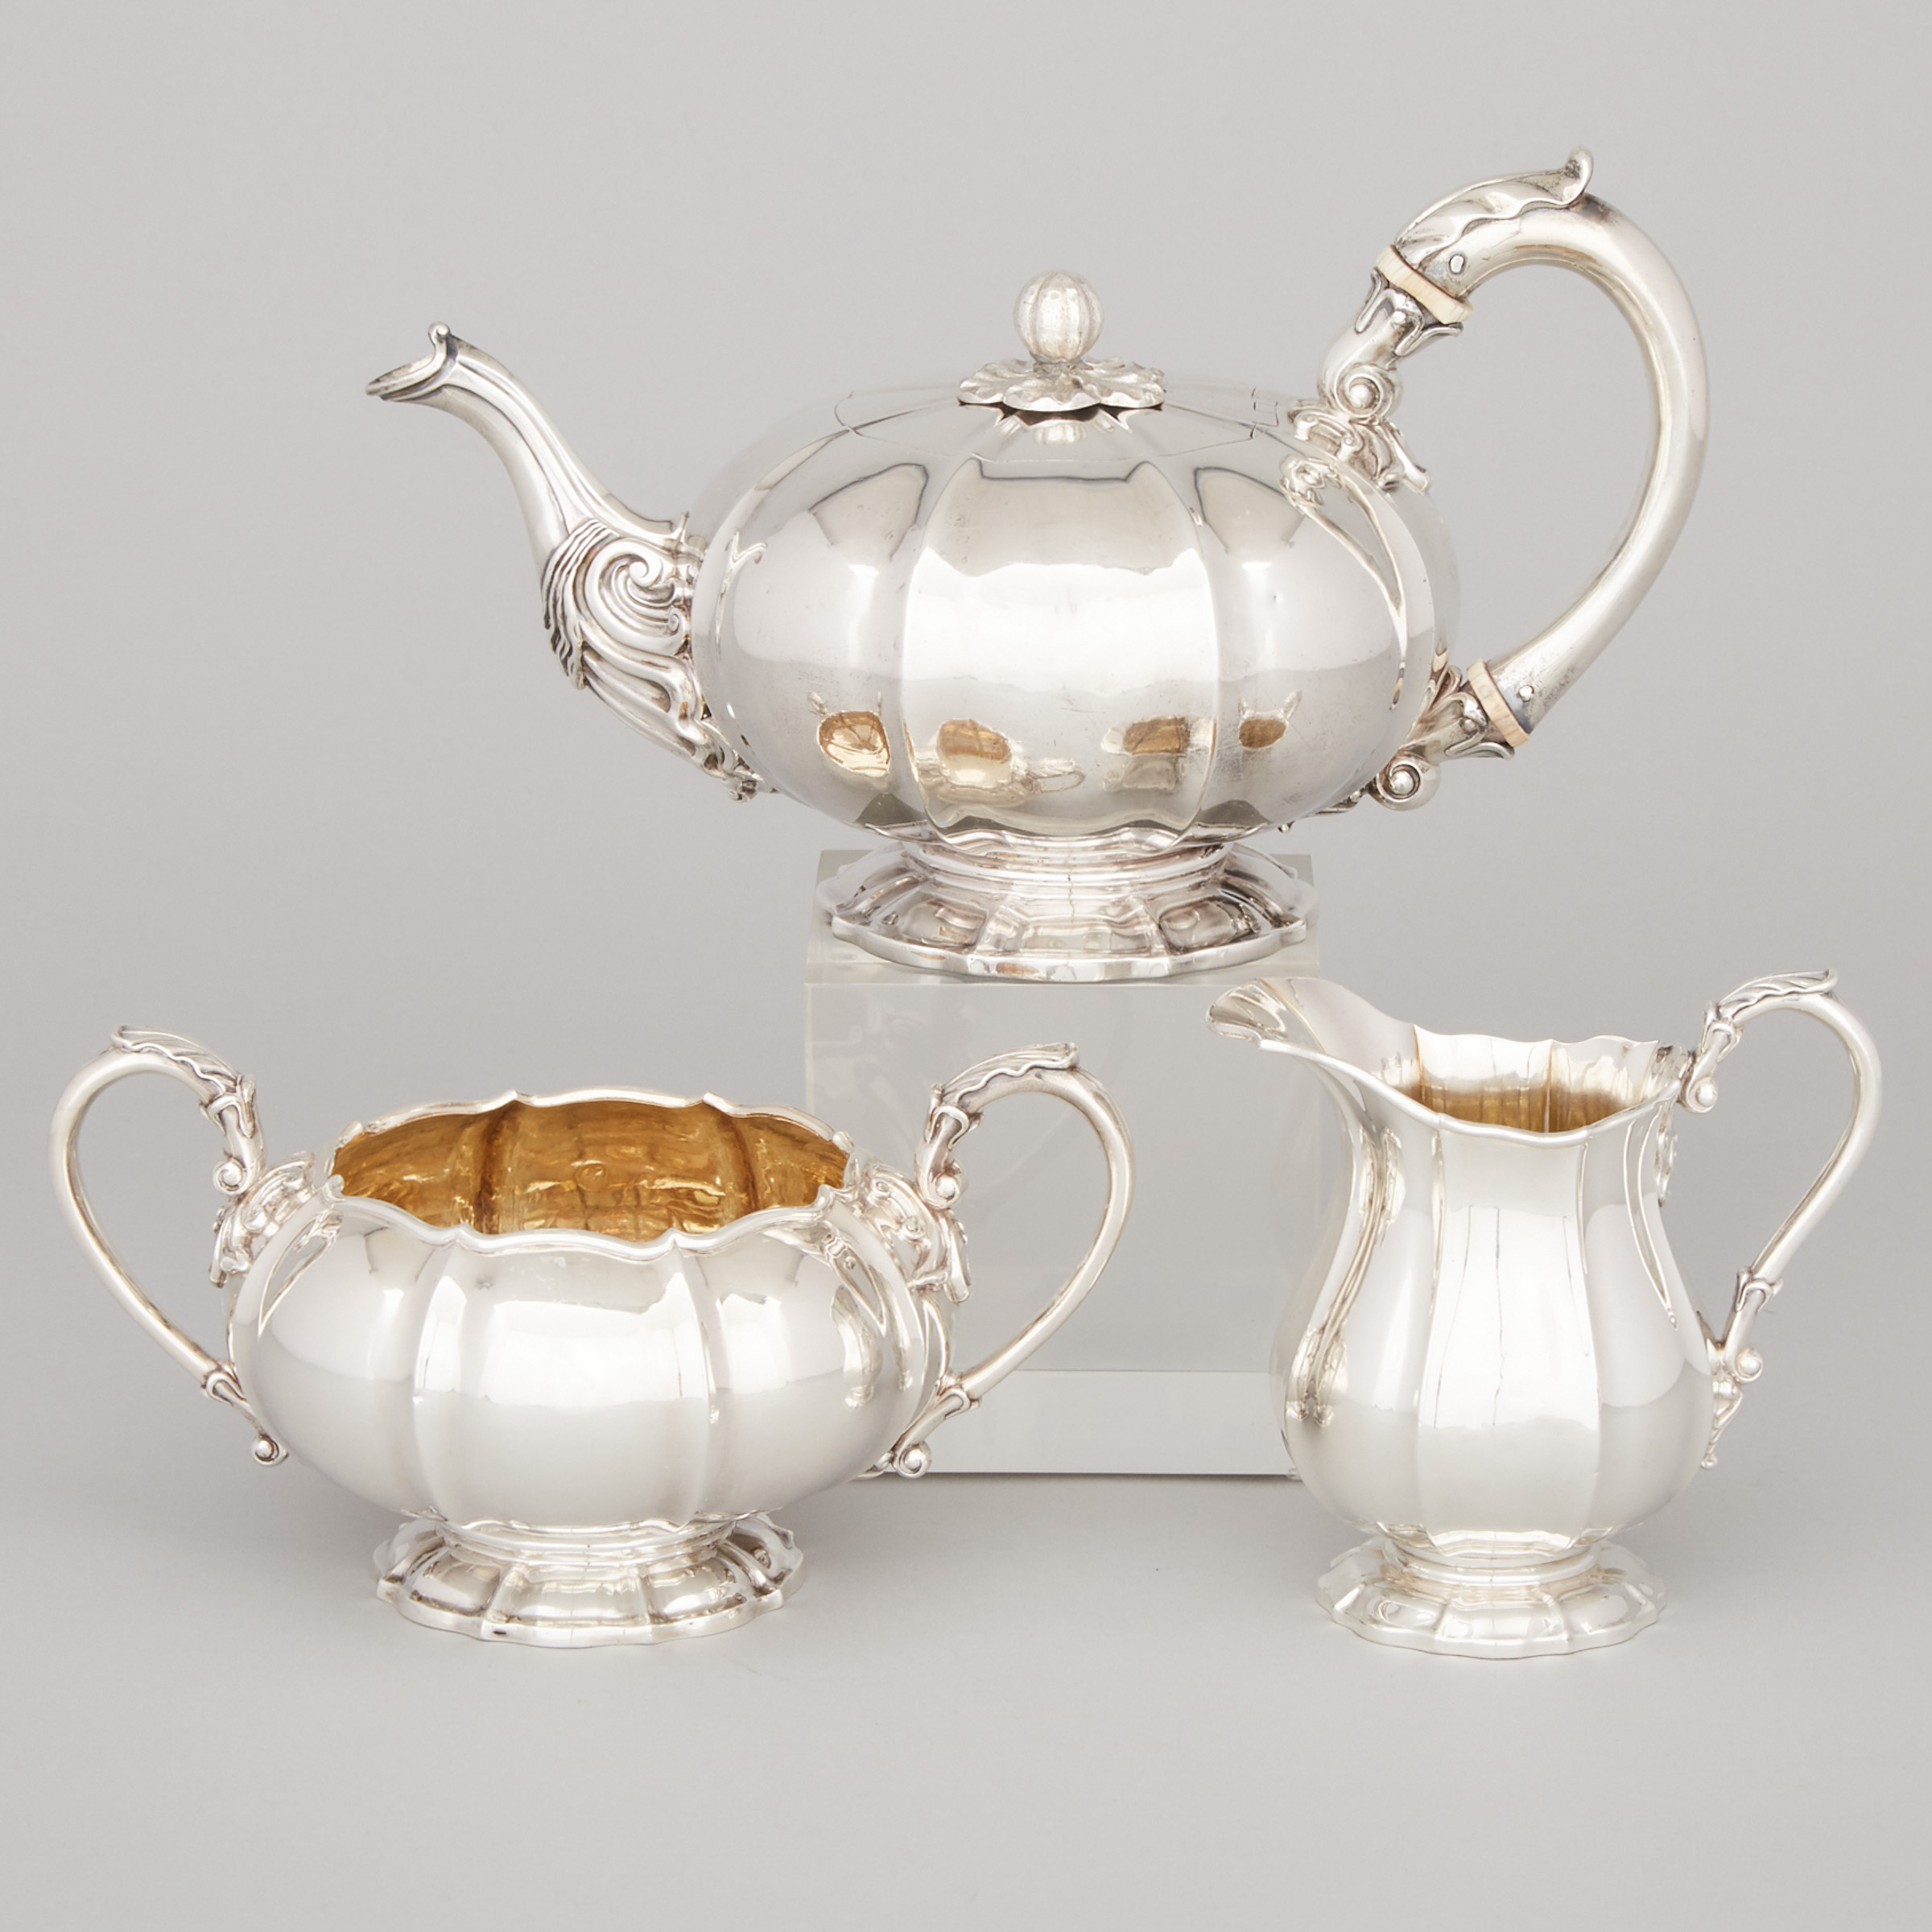 George IV Silver Tea Service, William Easterbrook, London, 1820/21